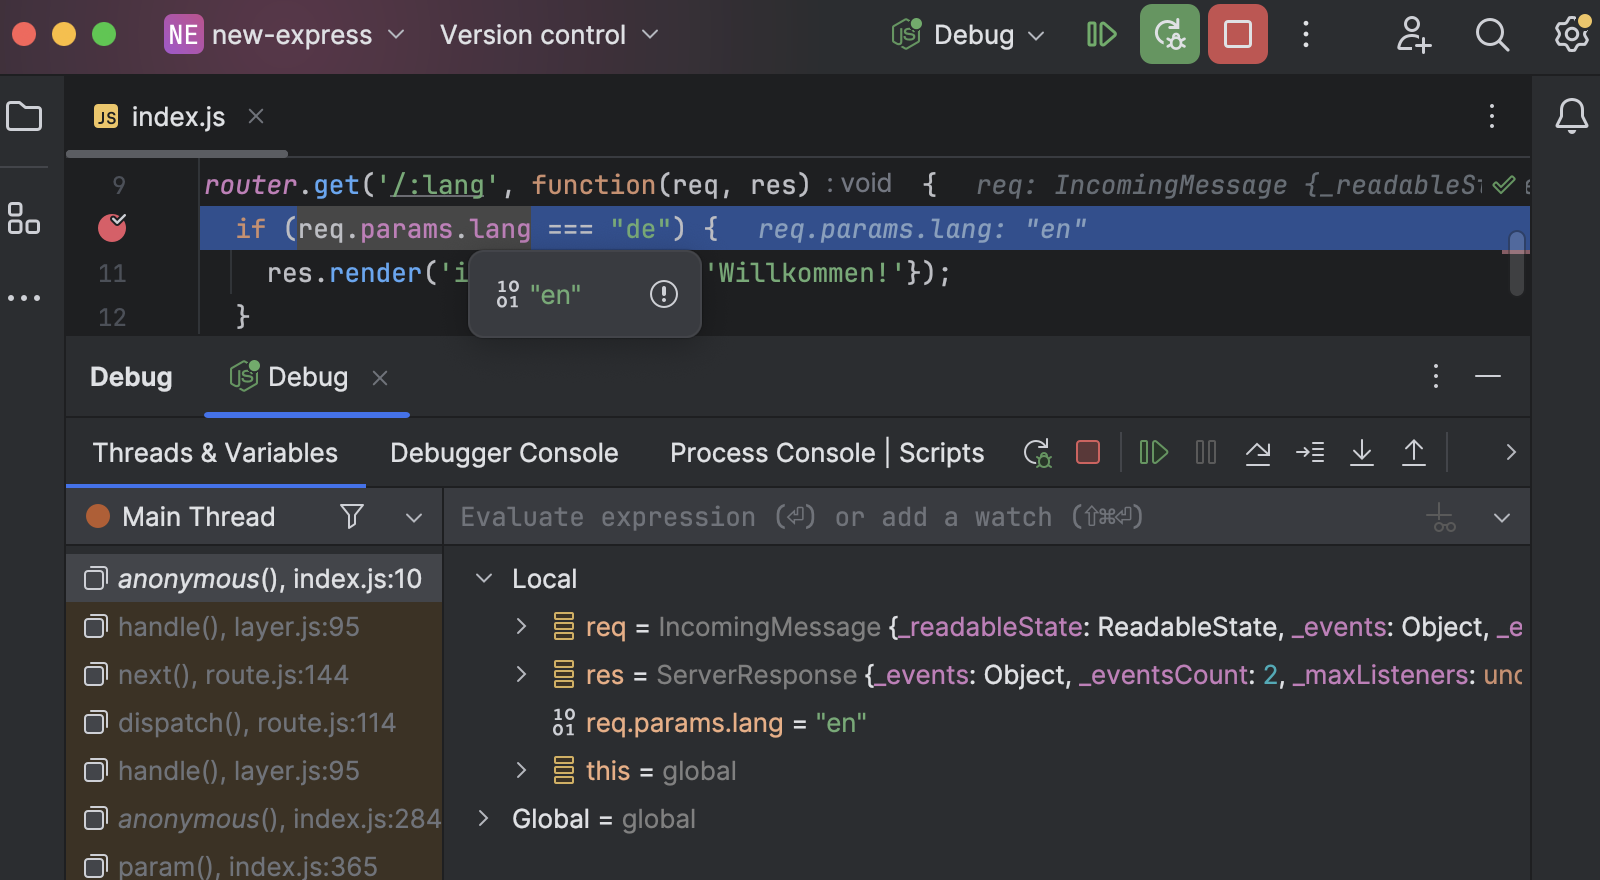 Debug tool window during a debugging session.
blog_post_debugging_debug_tool_window_active.png